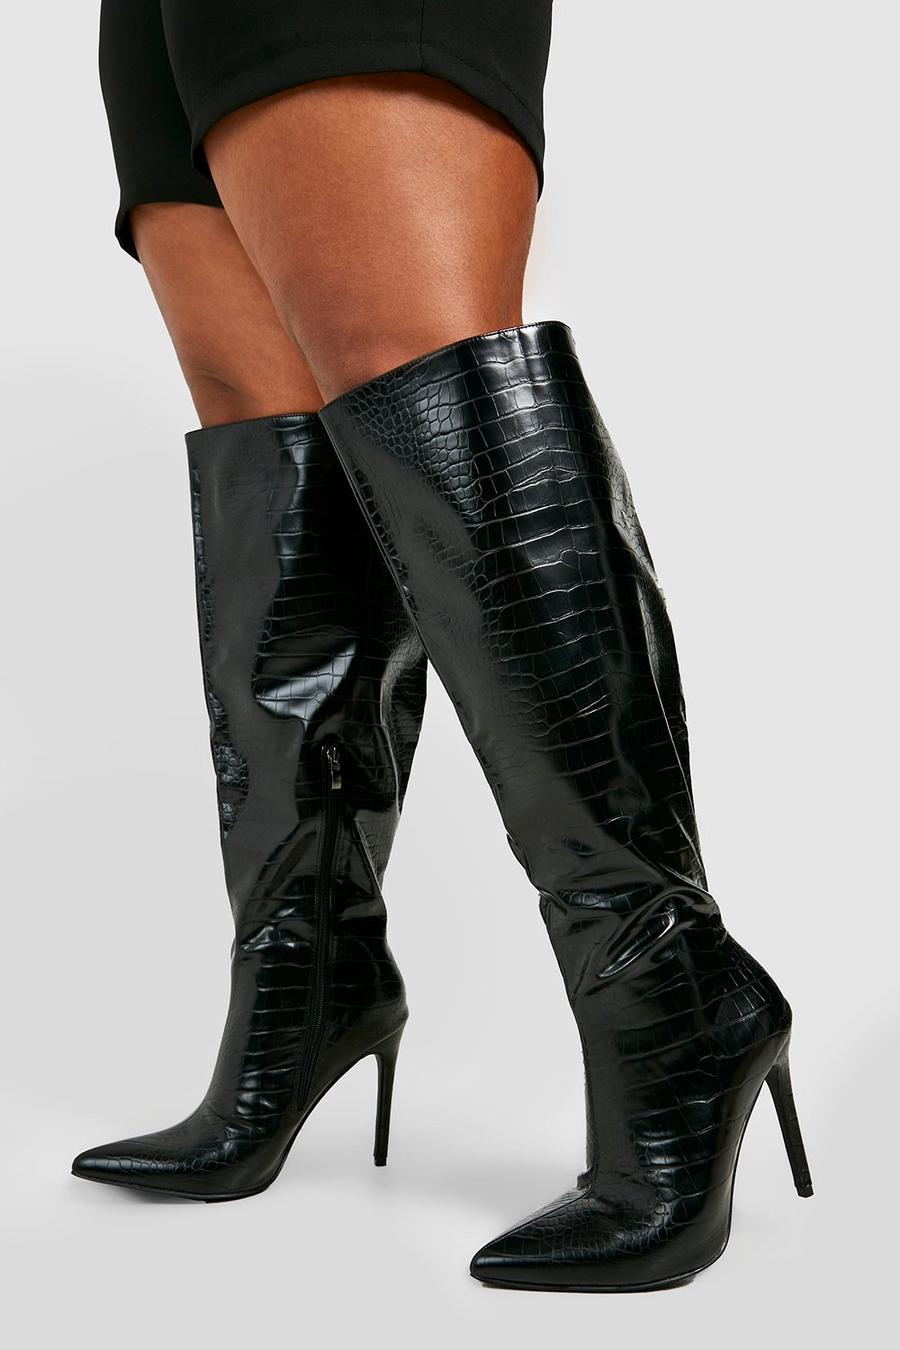 Black noir Wider Calf Knee High Stiletto Boots